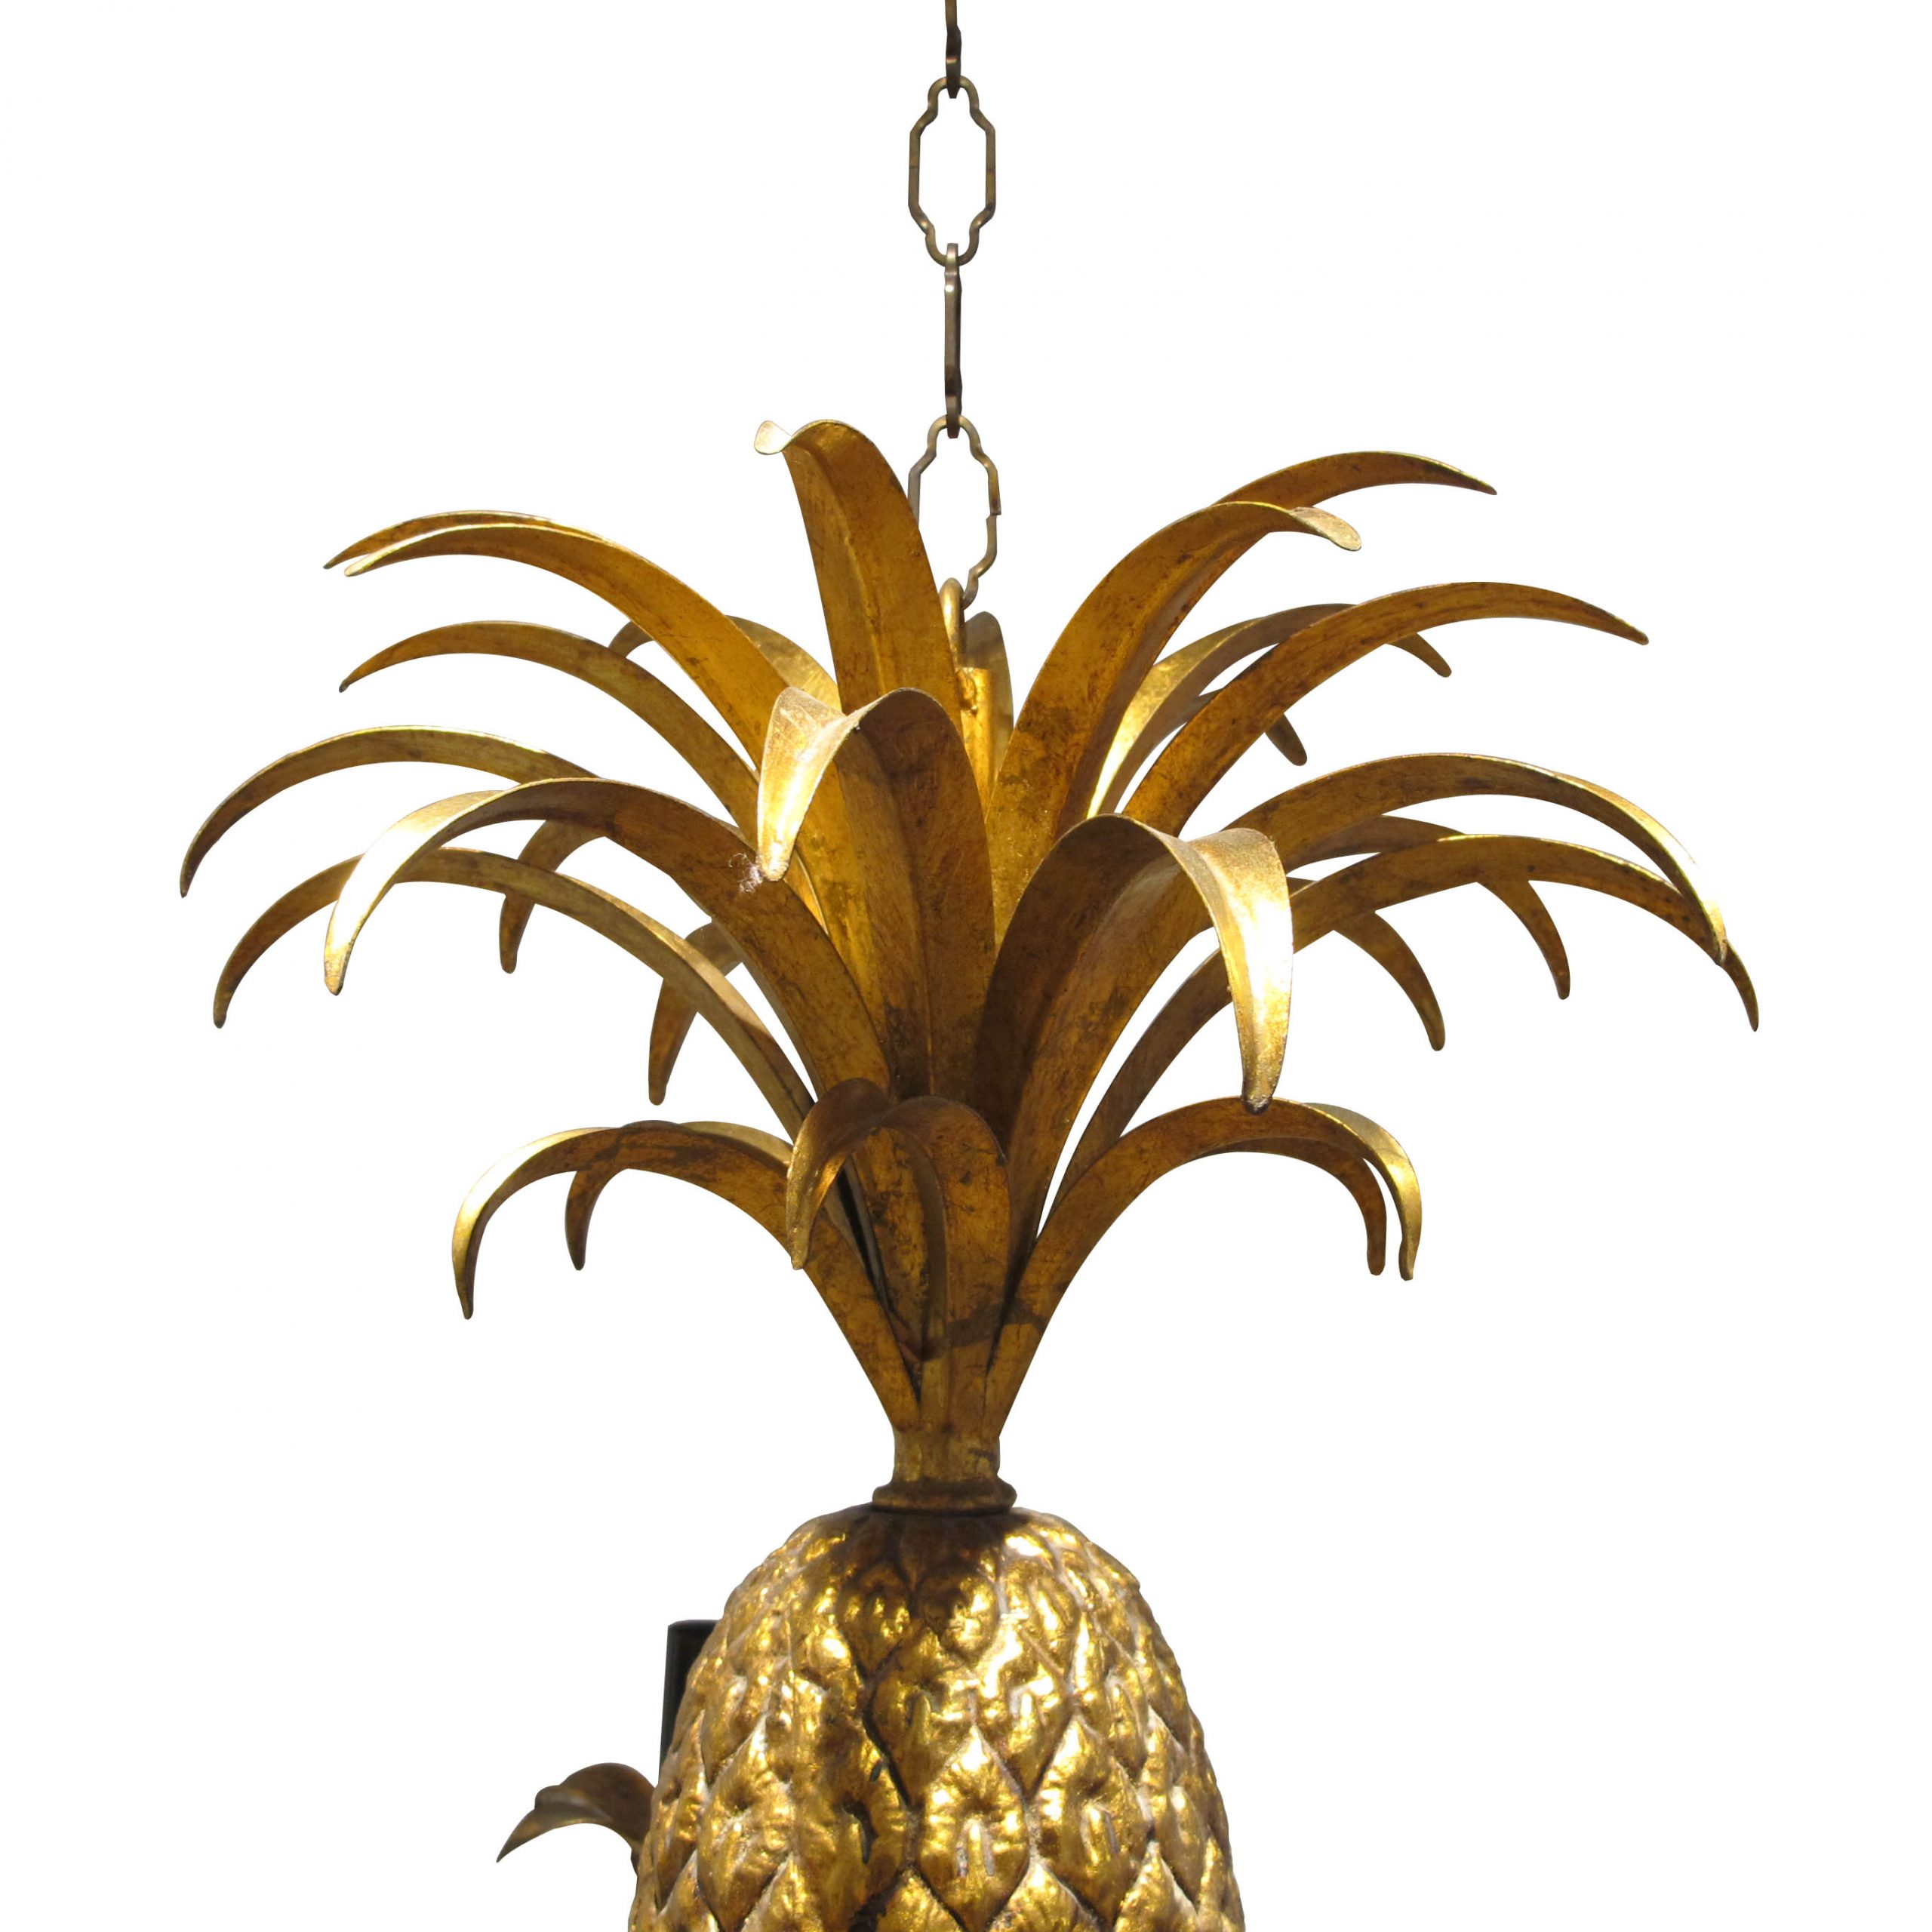 gold Italian Pineapple chandelier - Les Trois Garcons Interiors